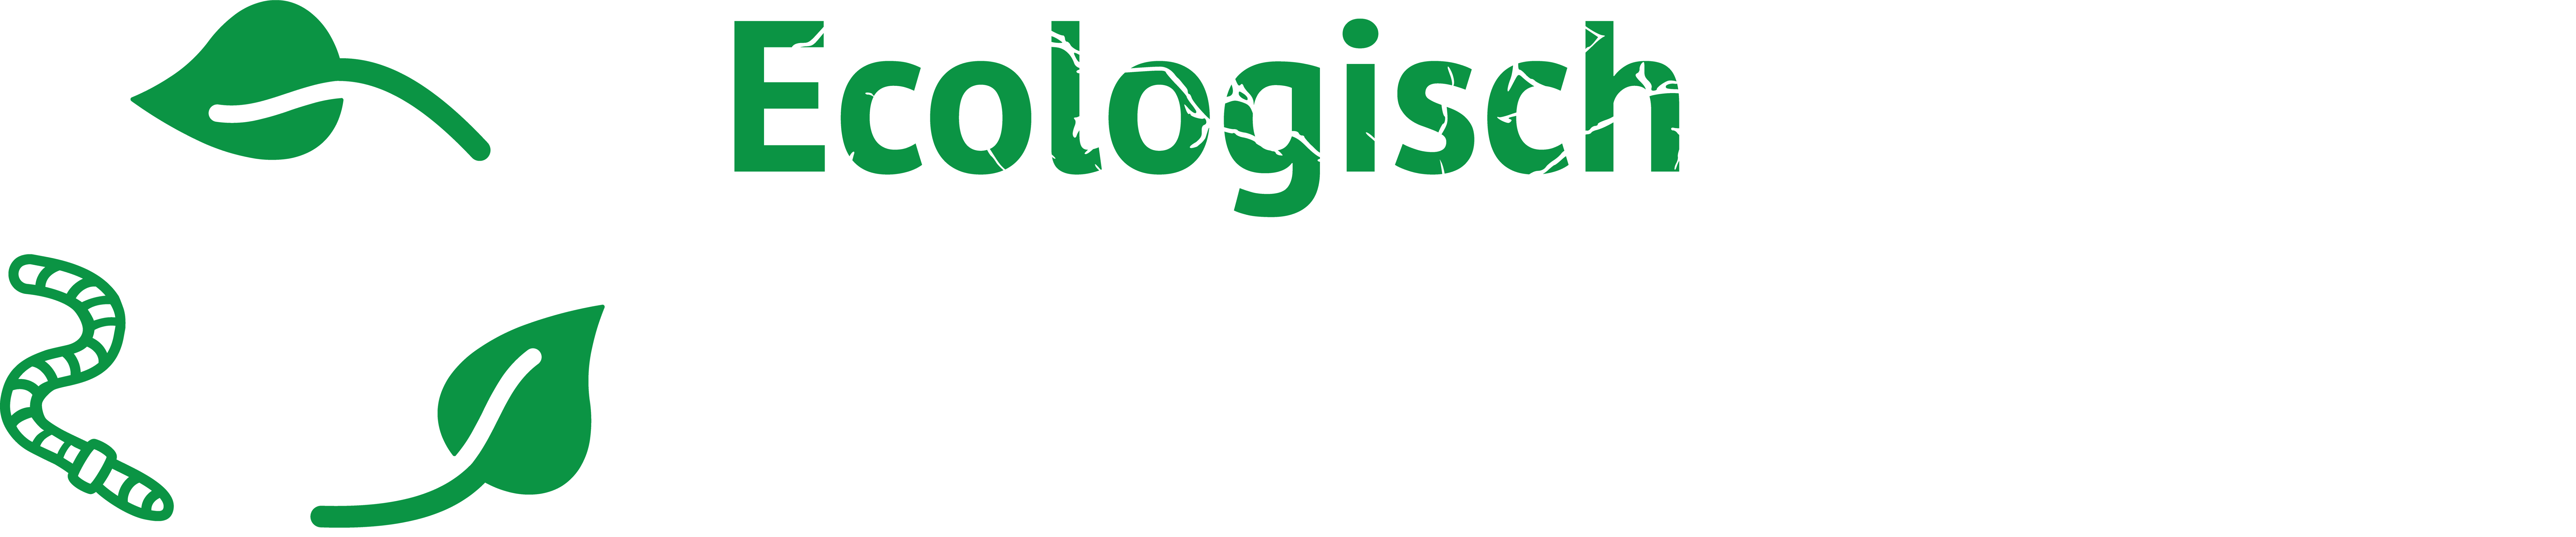 Paul Bluemink ecologisch hovenier